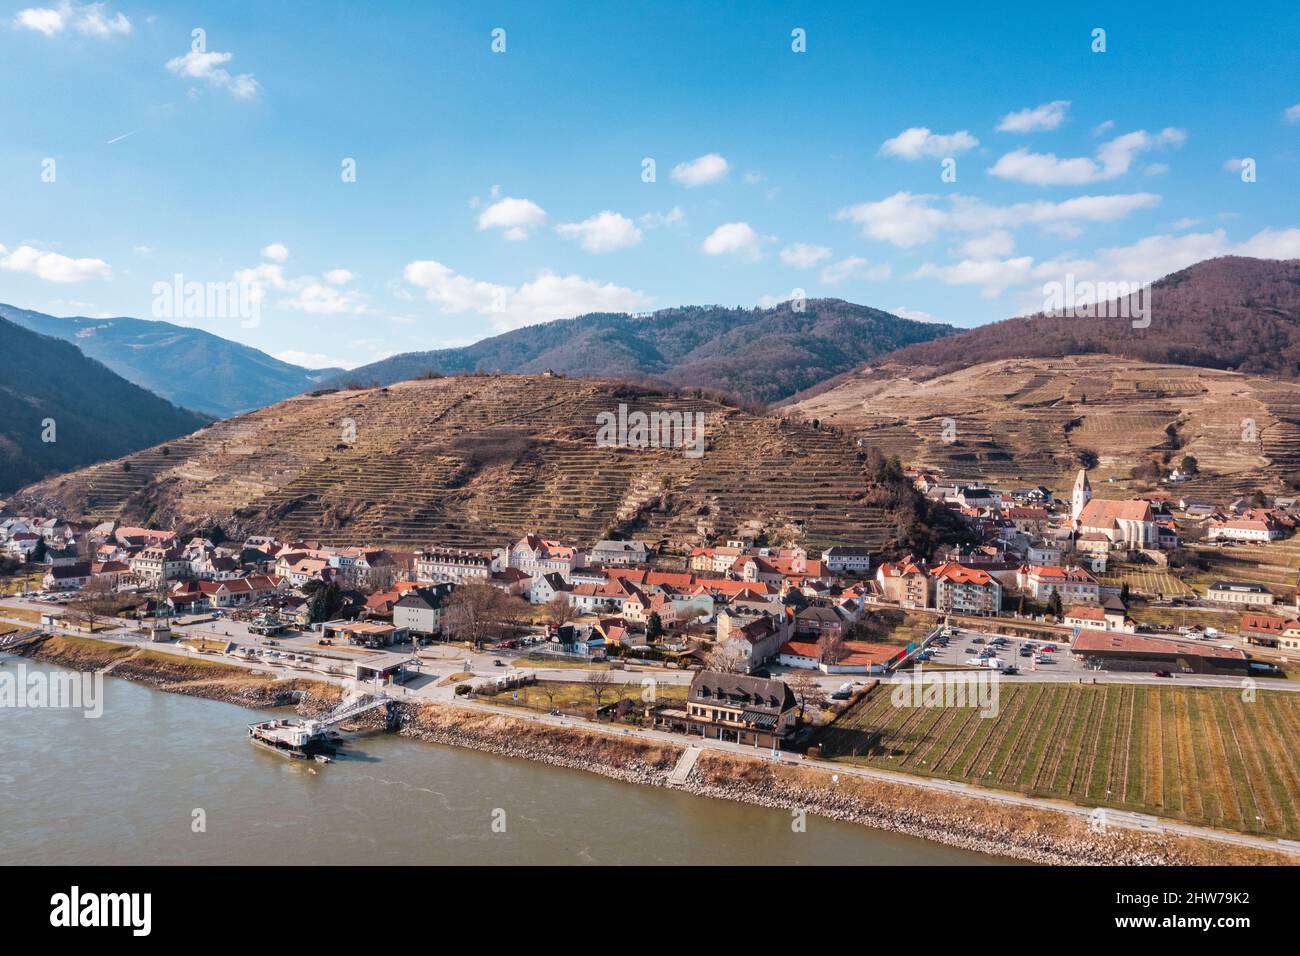 Spitz an der Donau. Famous village at the danube river in the Wachau Region of Lower Austria Stock Photo